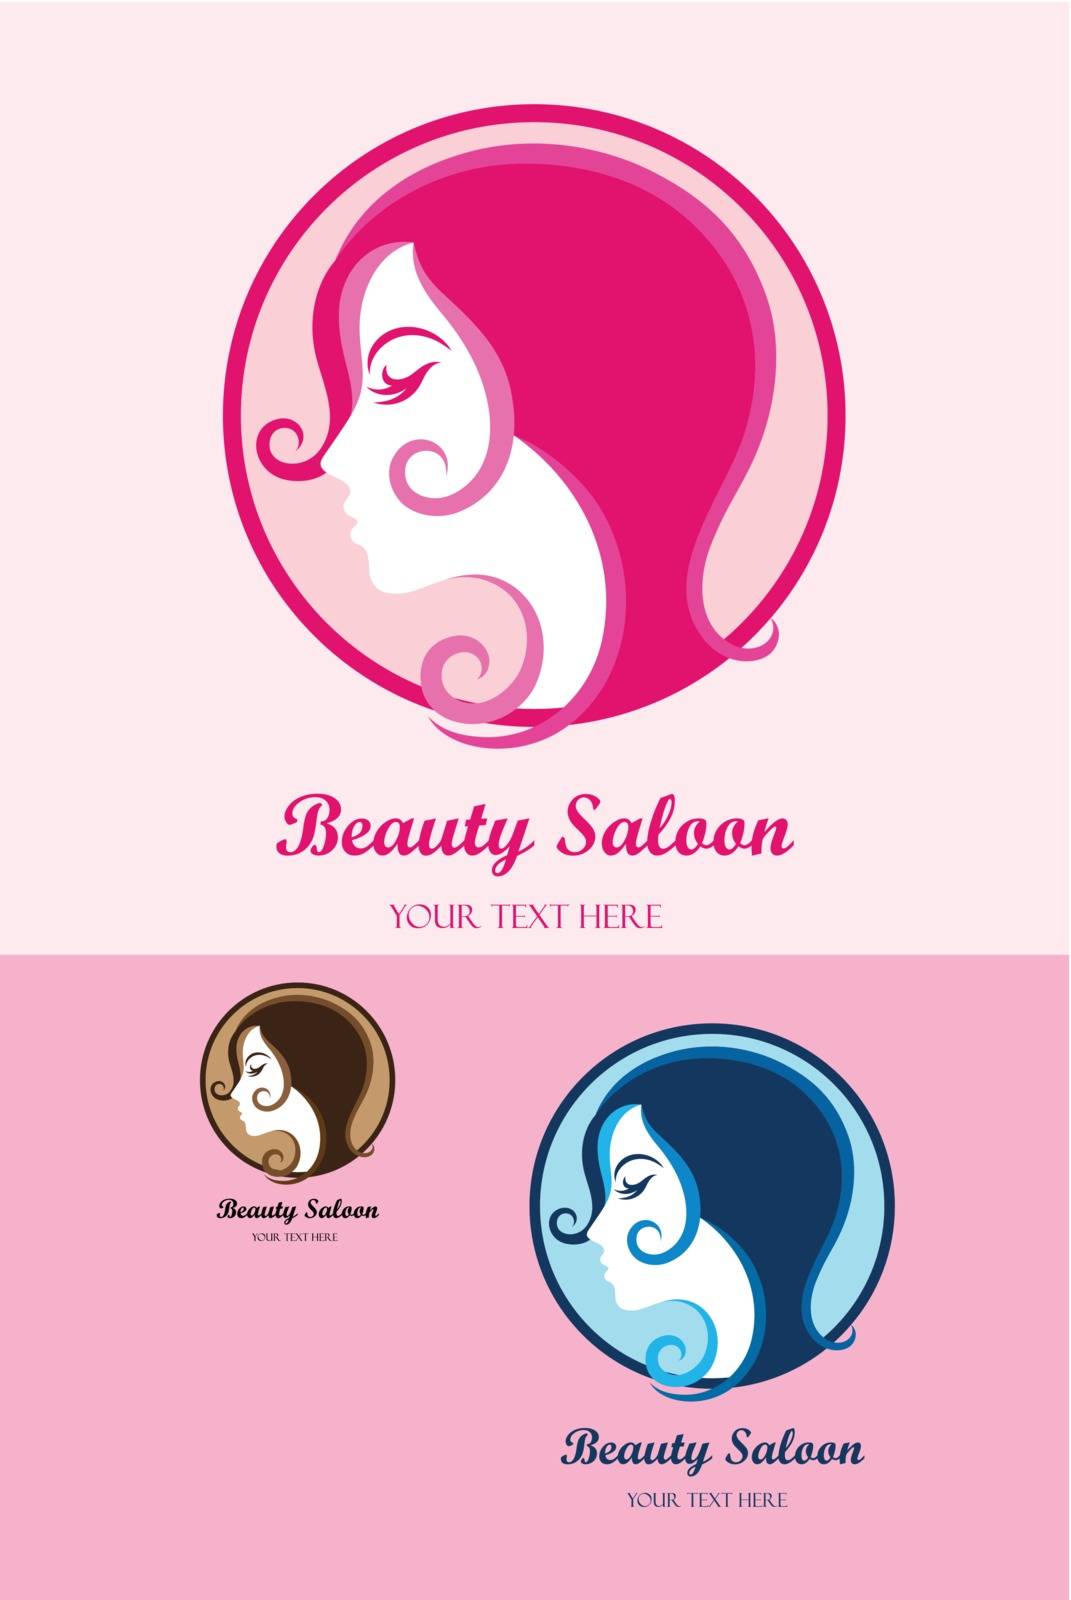 Beauty saloon , art vector pink logo design